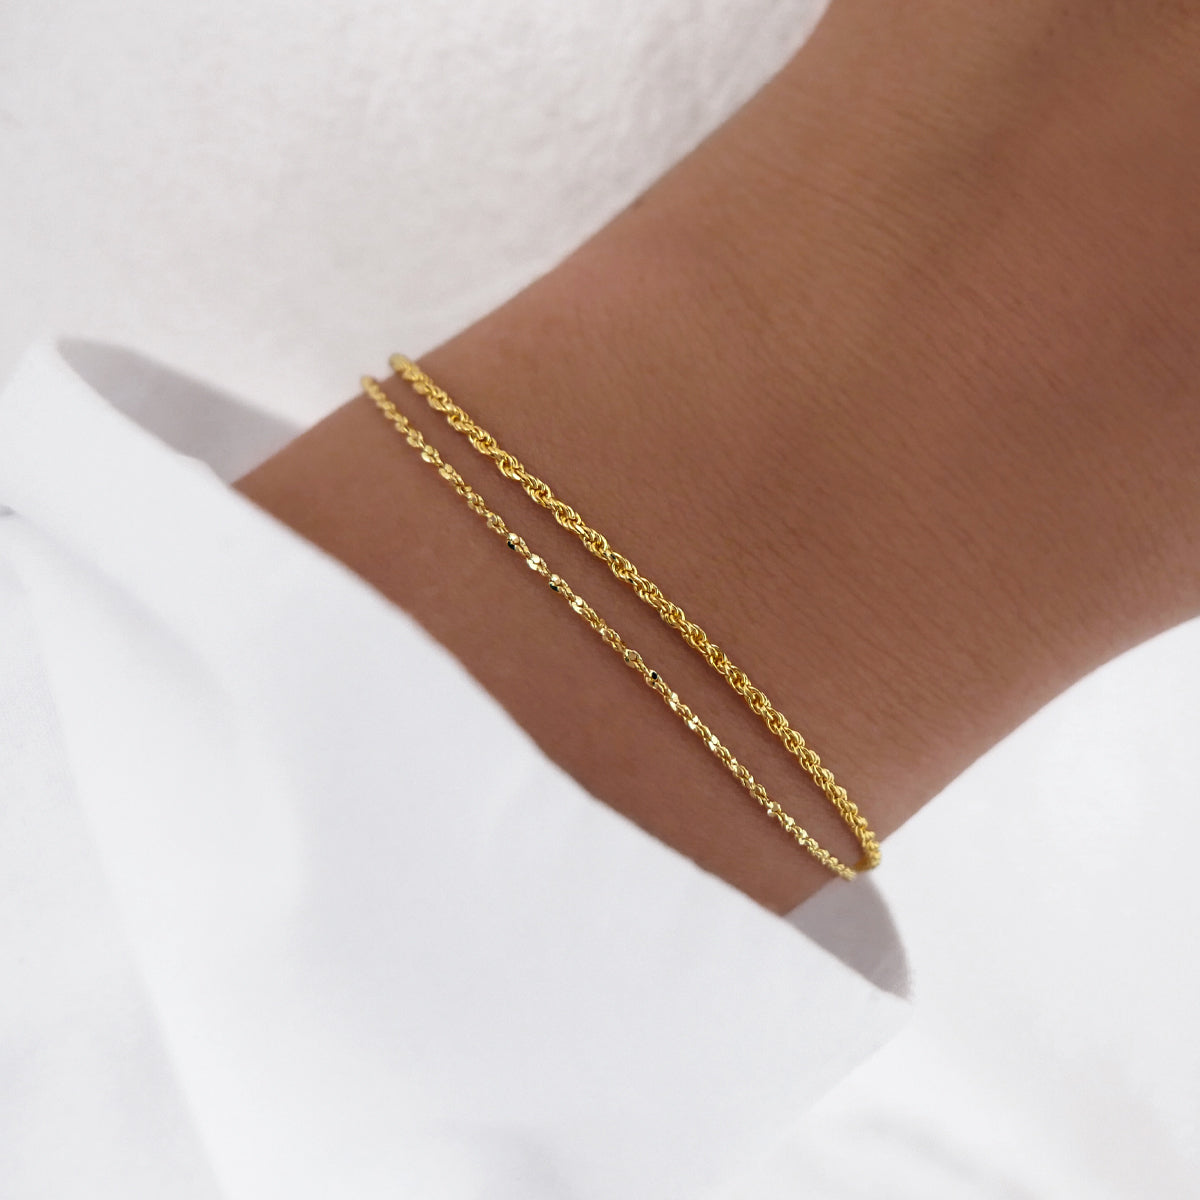 Tessa Bracelet Chain Gold